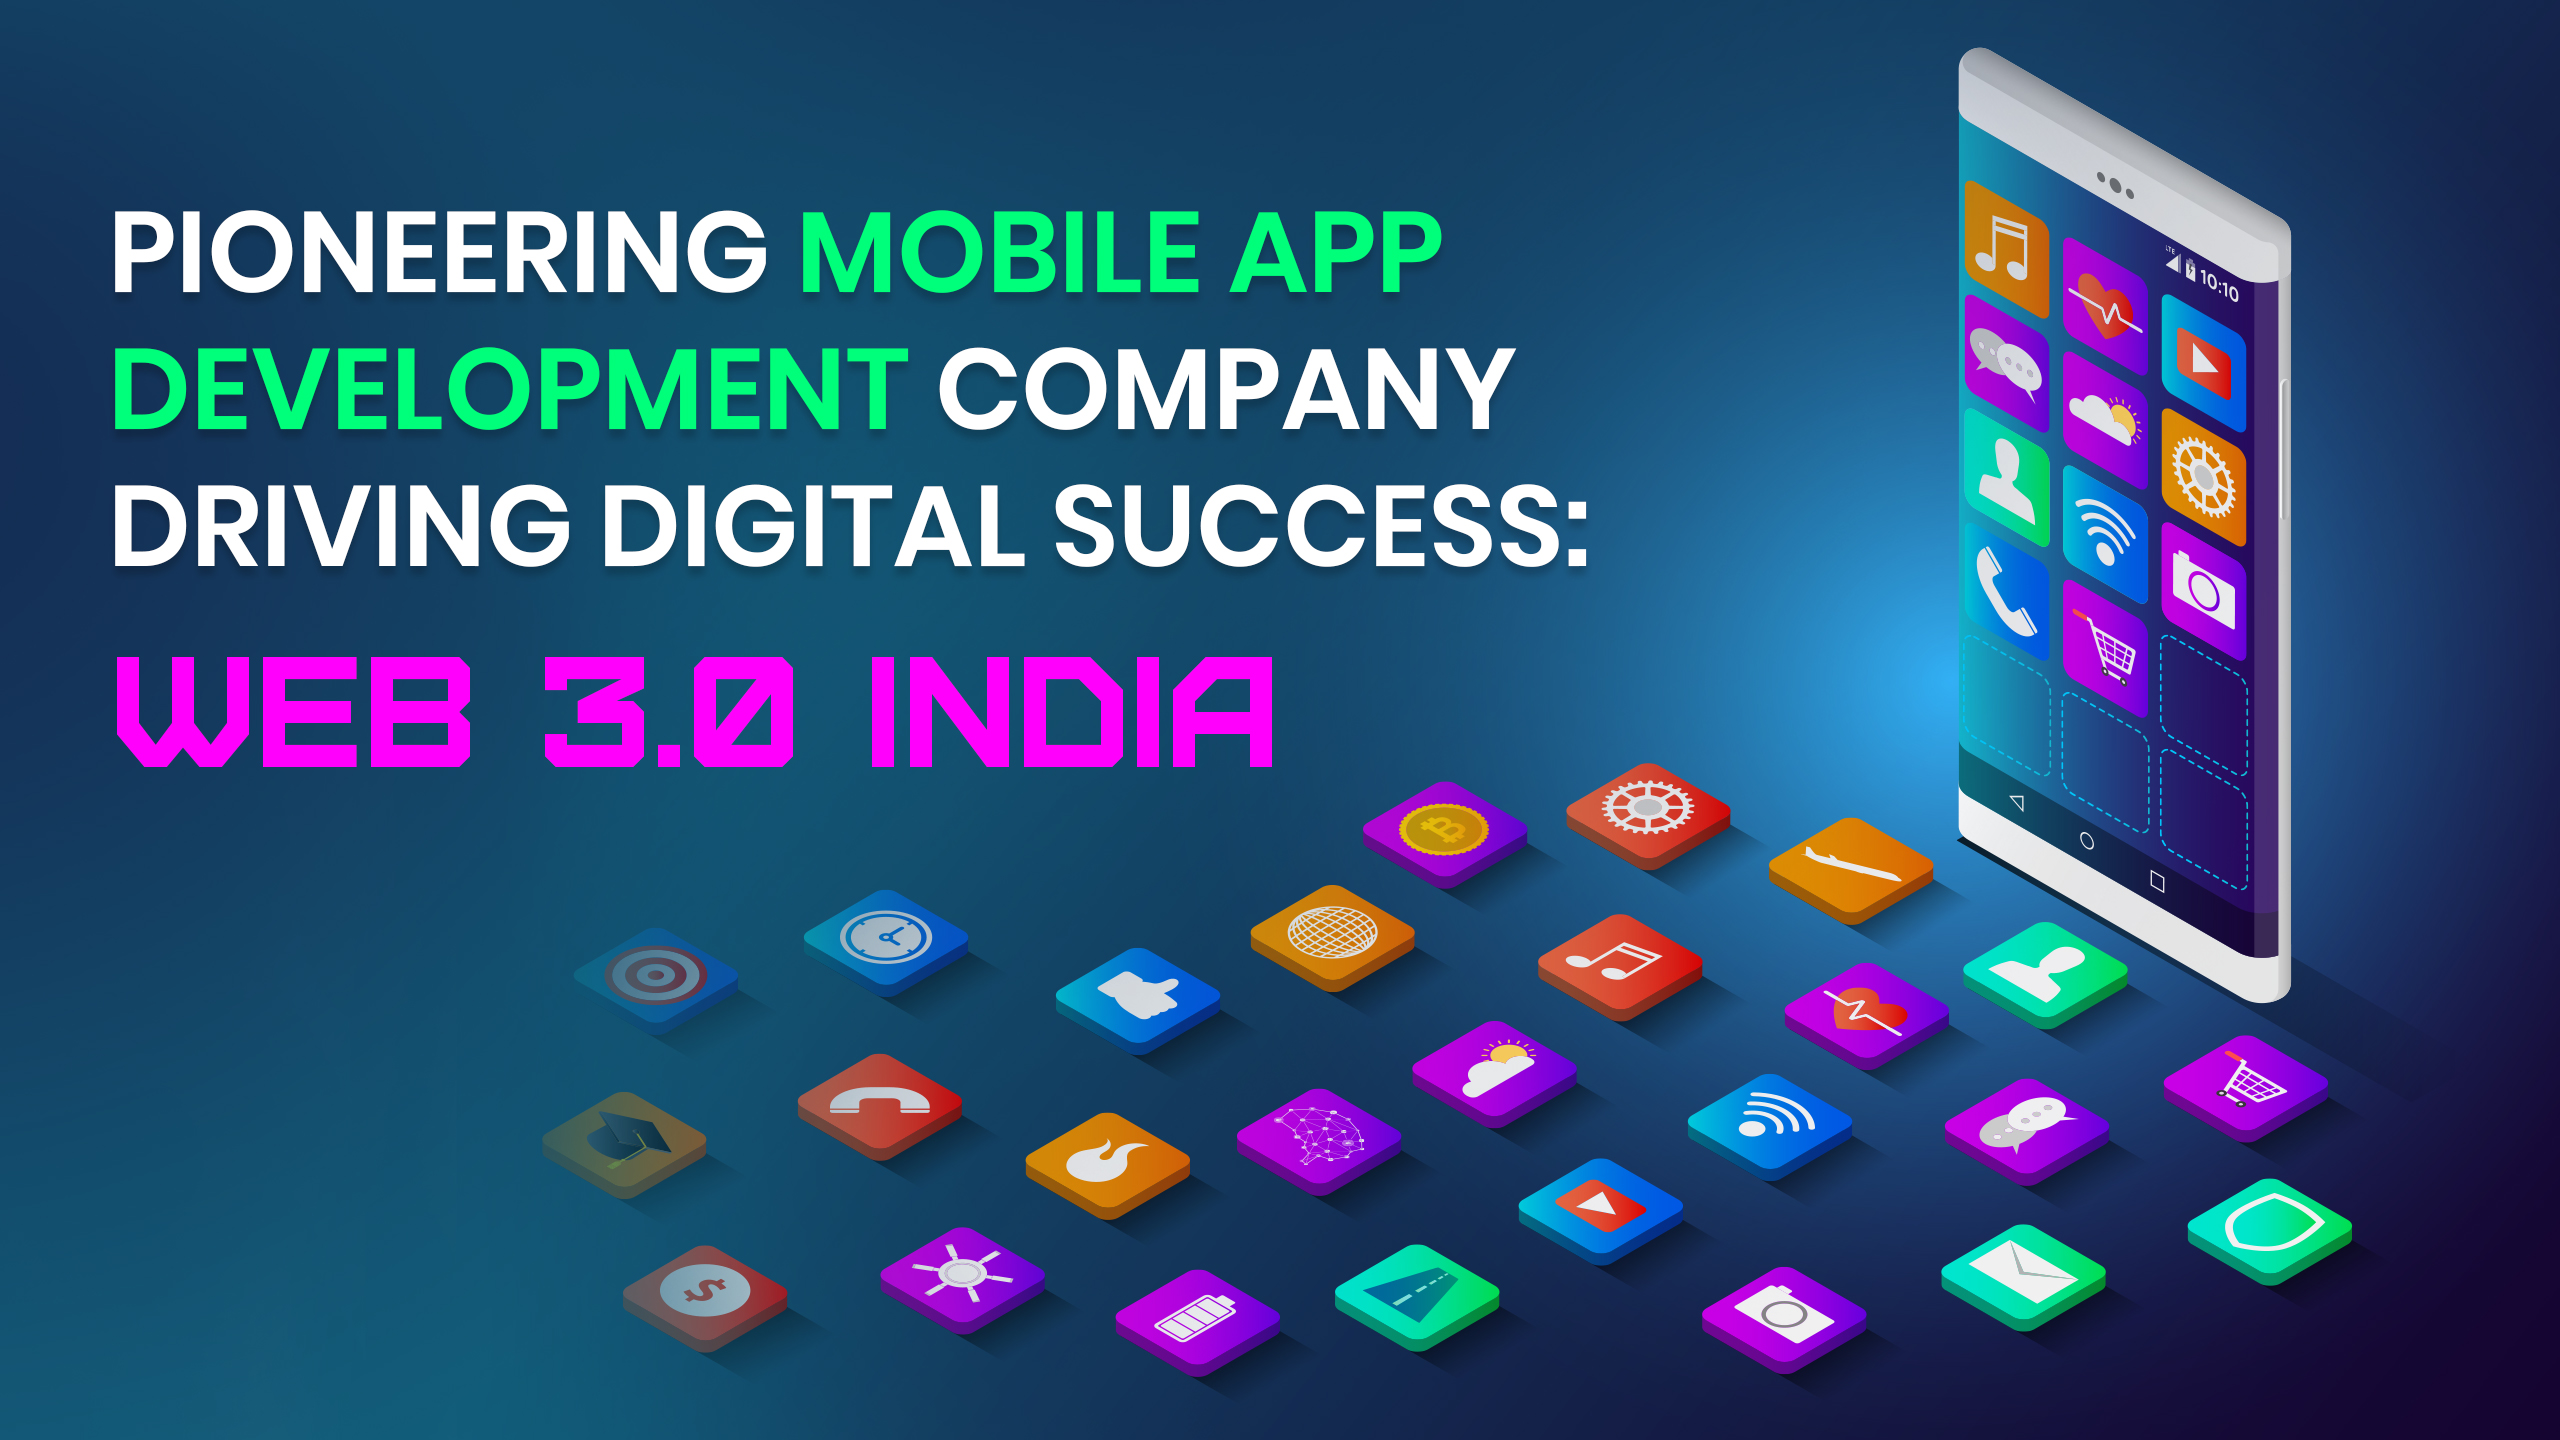 Mobile App Development Company - Web 3.0 India